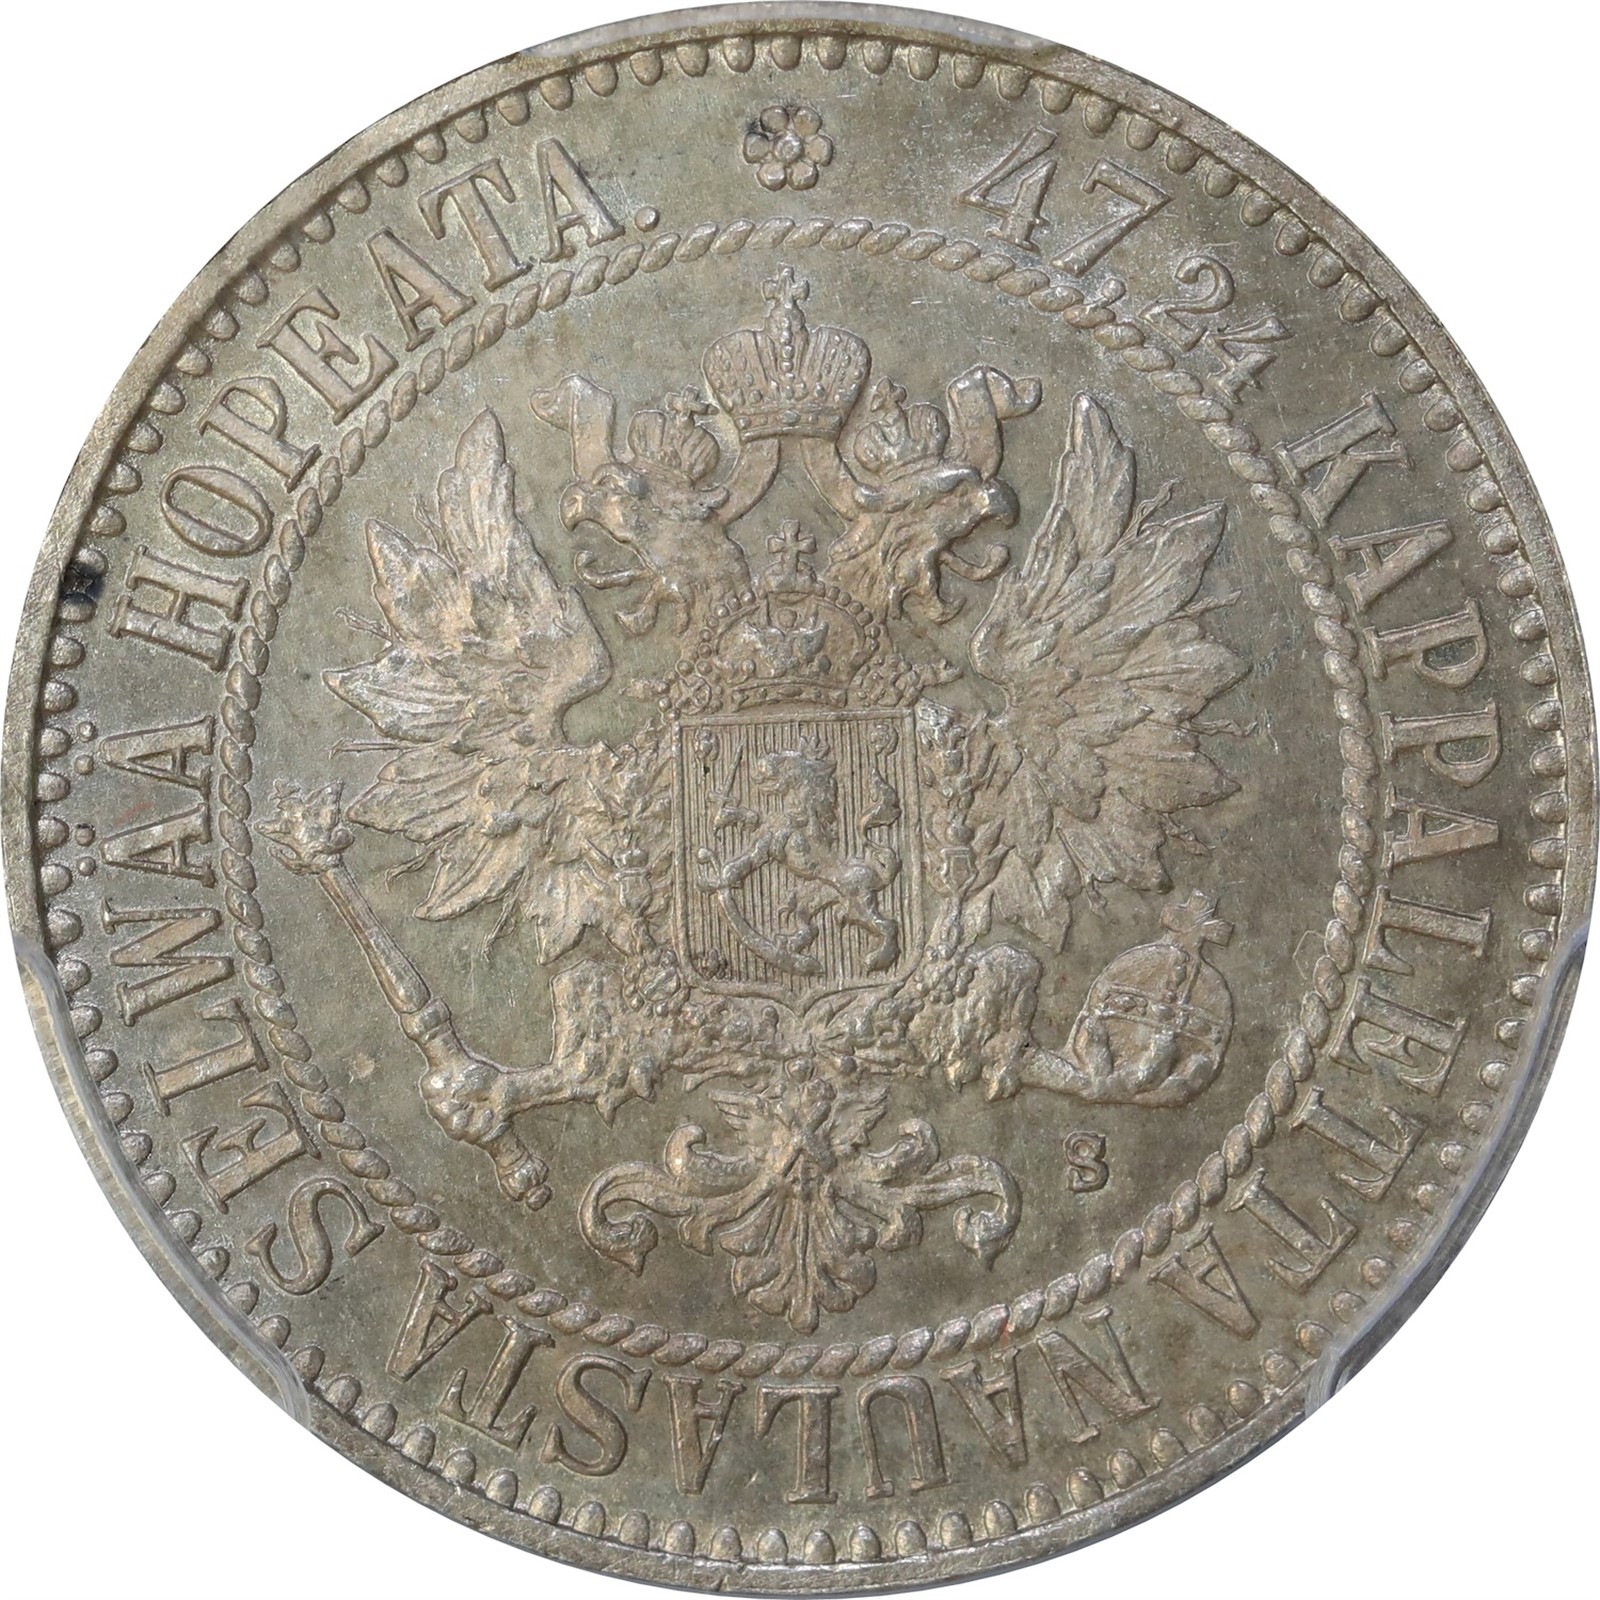 FINLAND, under RUSSIA. Alexander II. 2 Markkaa 1865 PCGS MS63